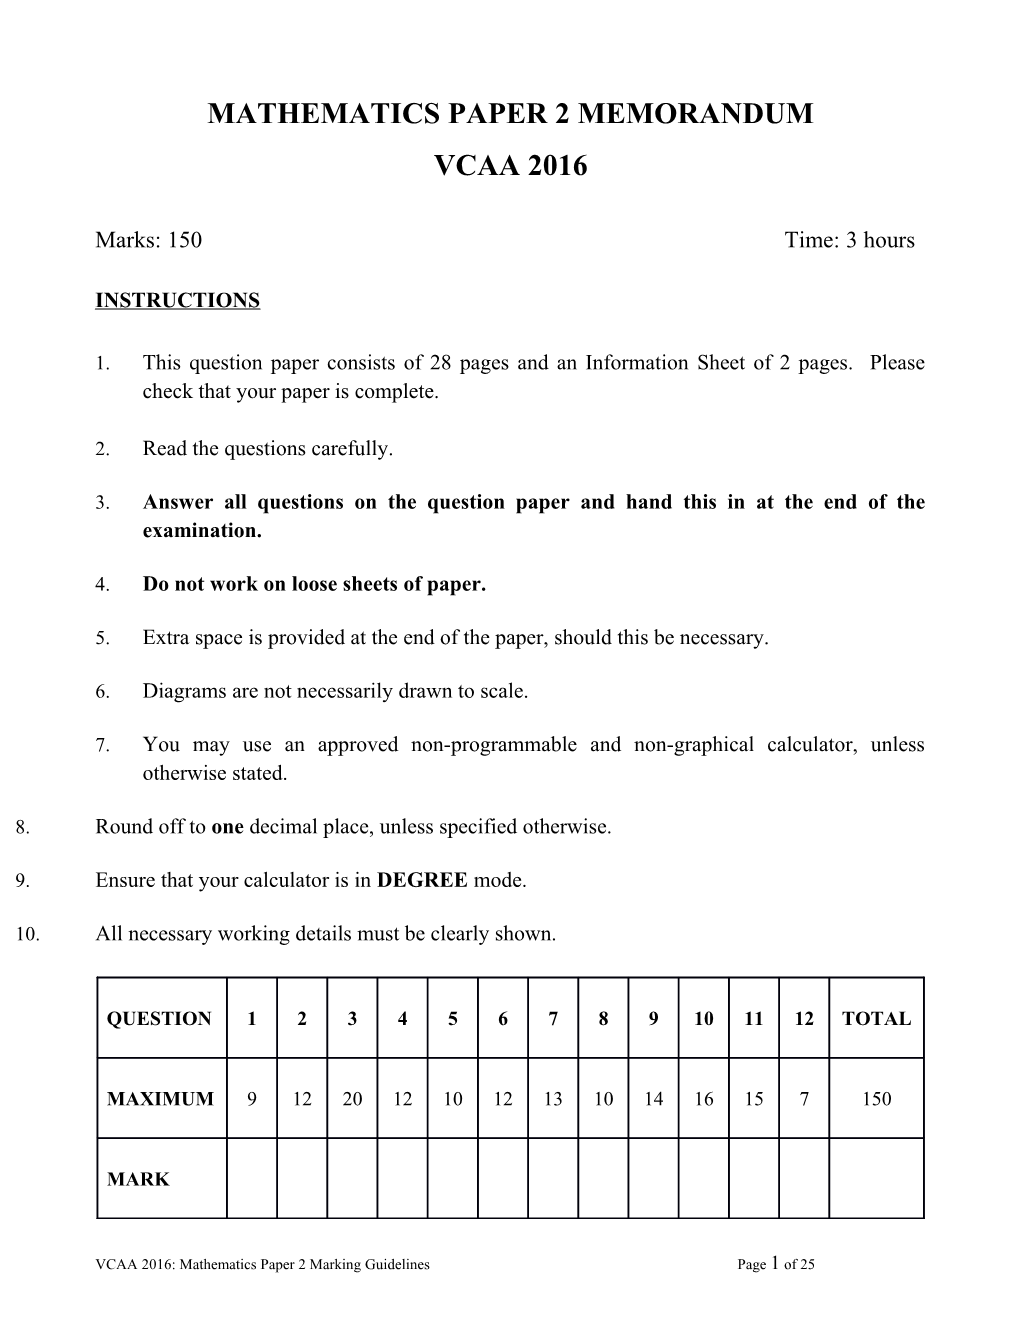 Mathematics Paper 2 Memorandum